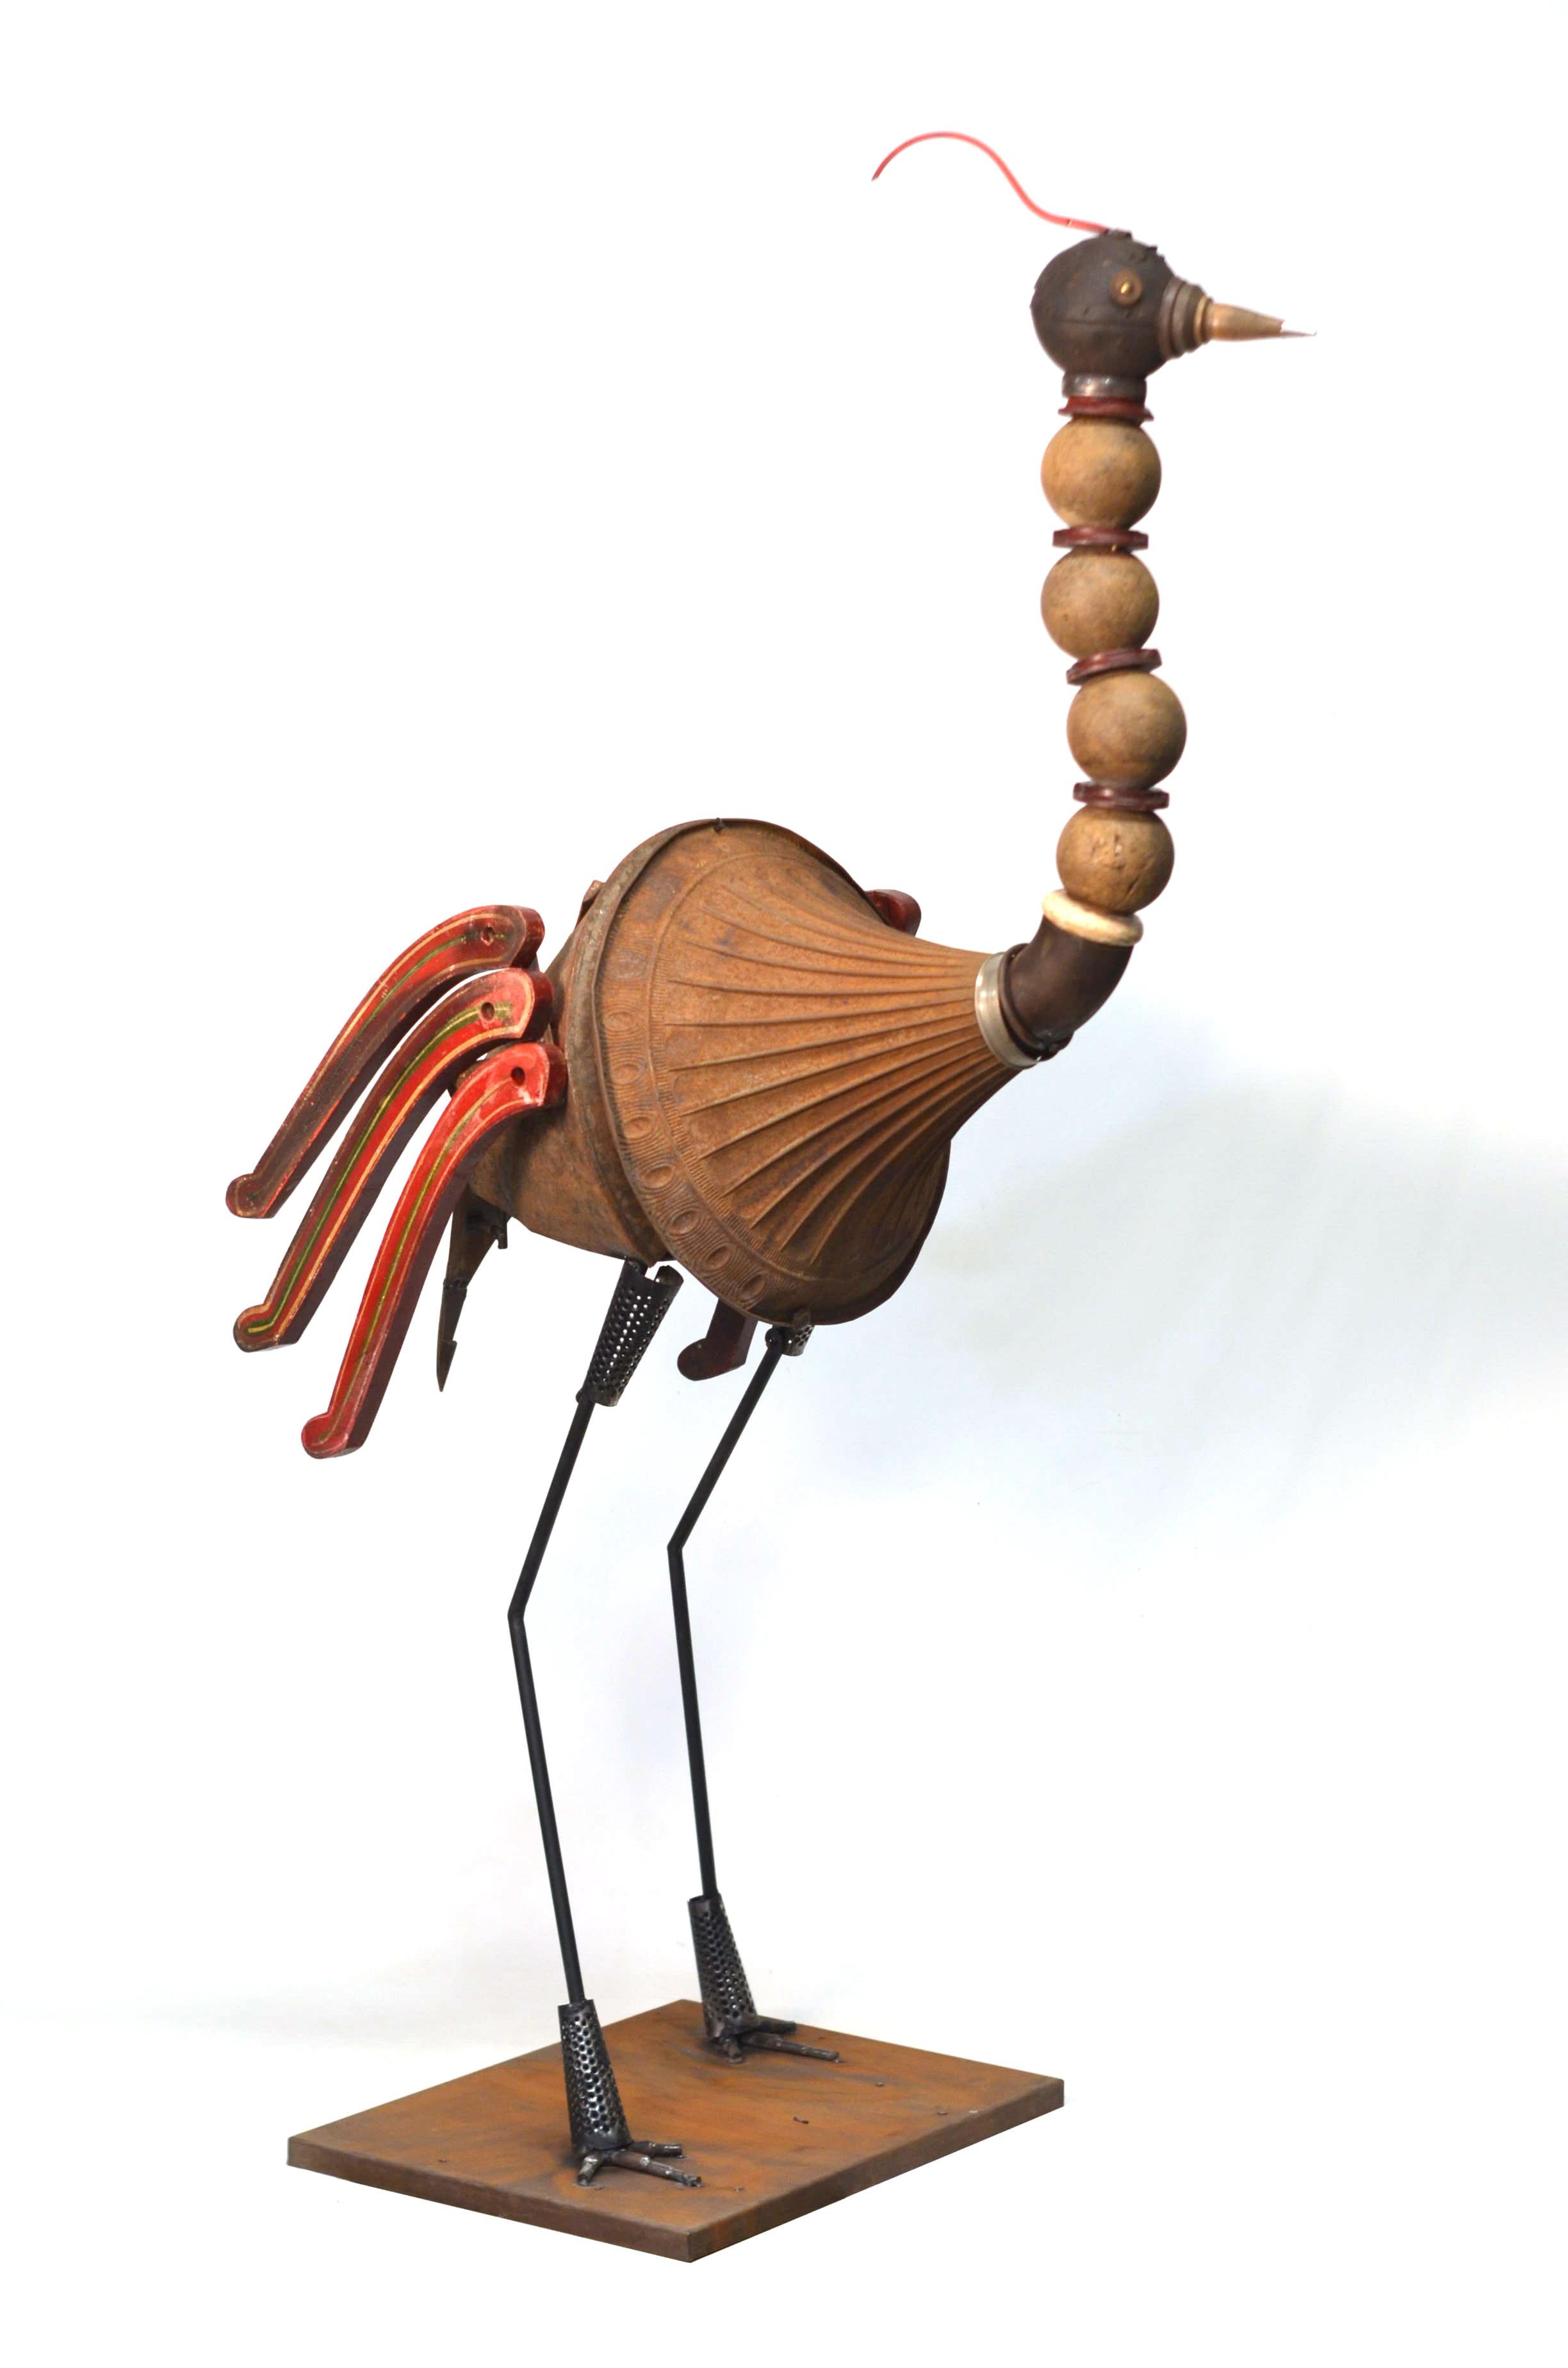 Miquel Aparici Figurative Sculpture - Gran Pájaro - 21st Century, Contemporary Sculpture, Figurative, Recycled Objects